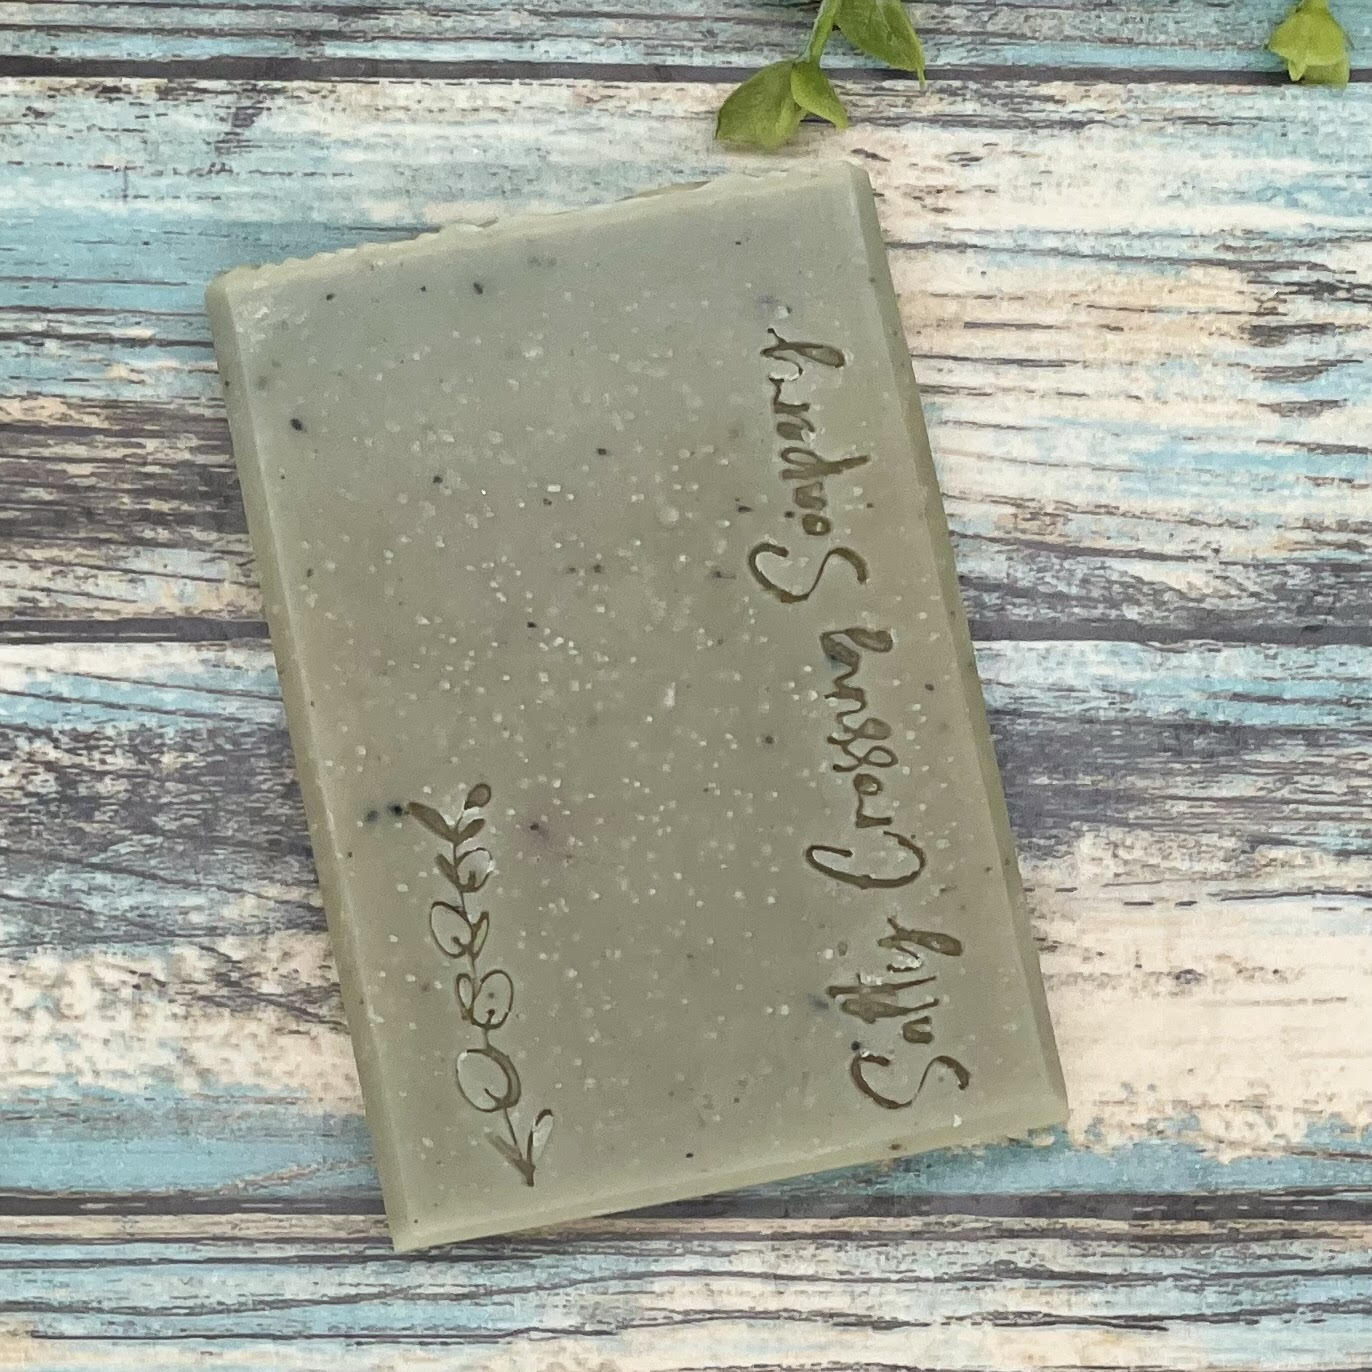 Eucalyptus Mint Soap | All Natural Artisan Bath or Shower Bar | Handmade with Shea Butter, Coconut Milk | Earth & Vegan Friendly, Zero Waste